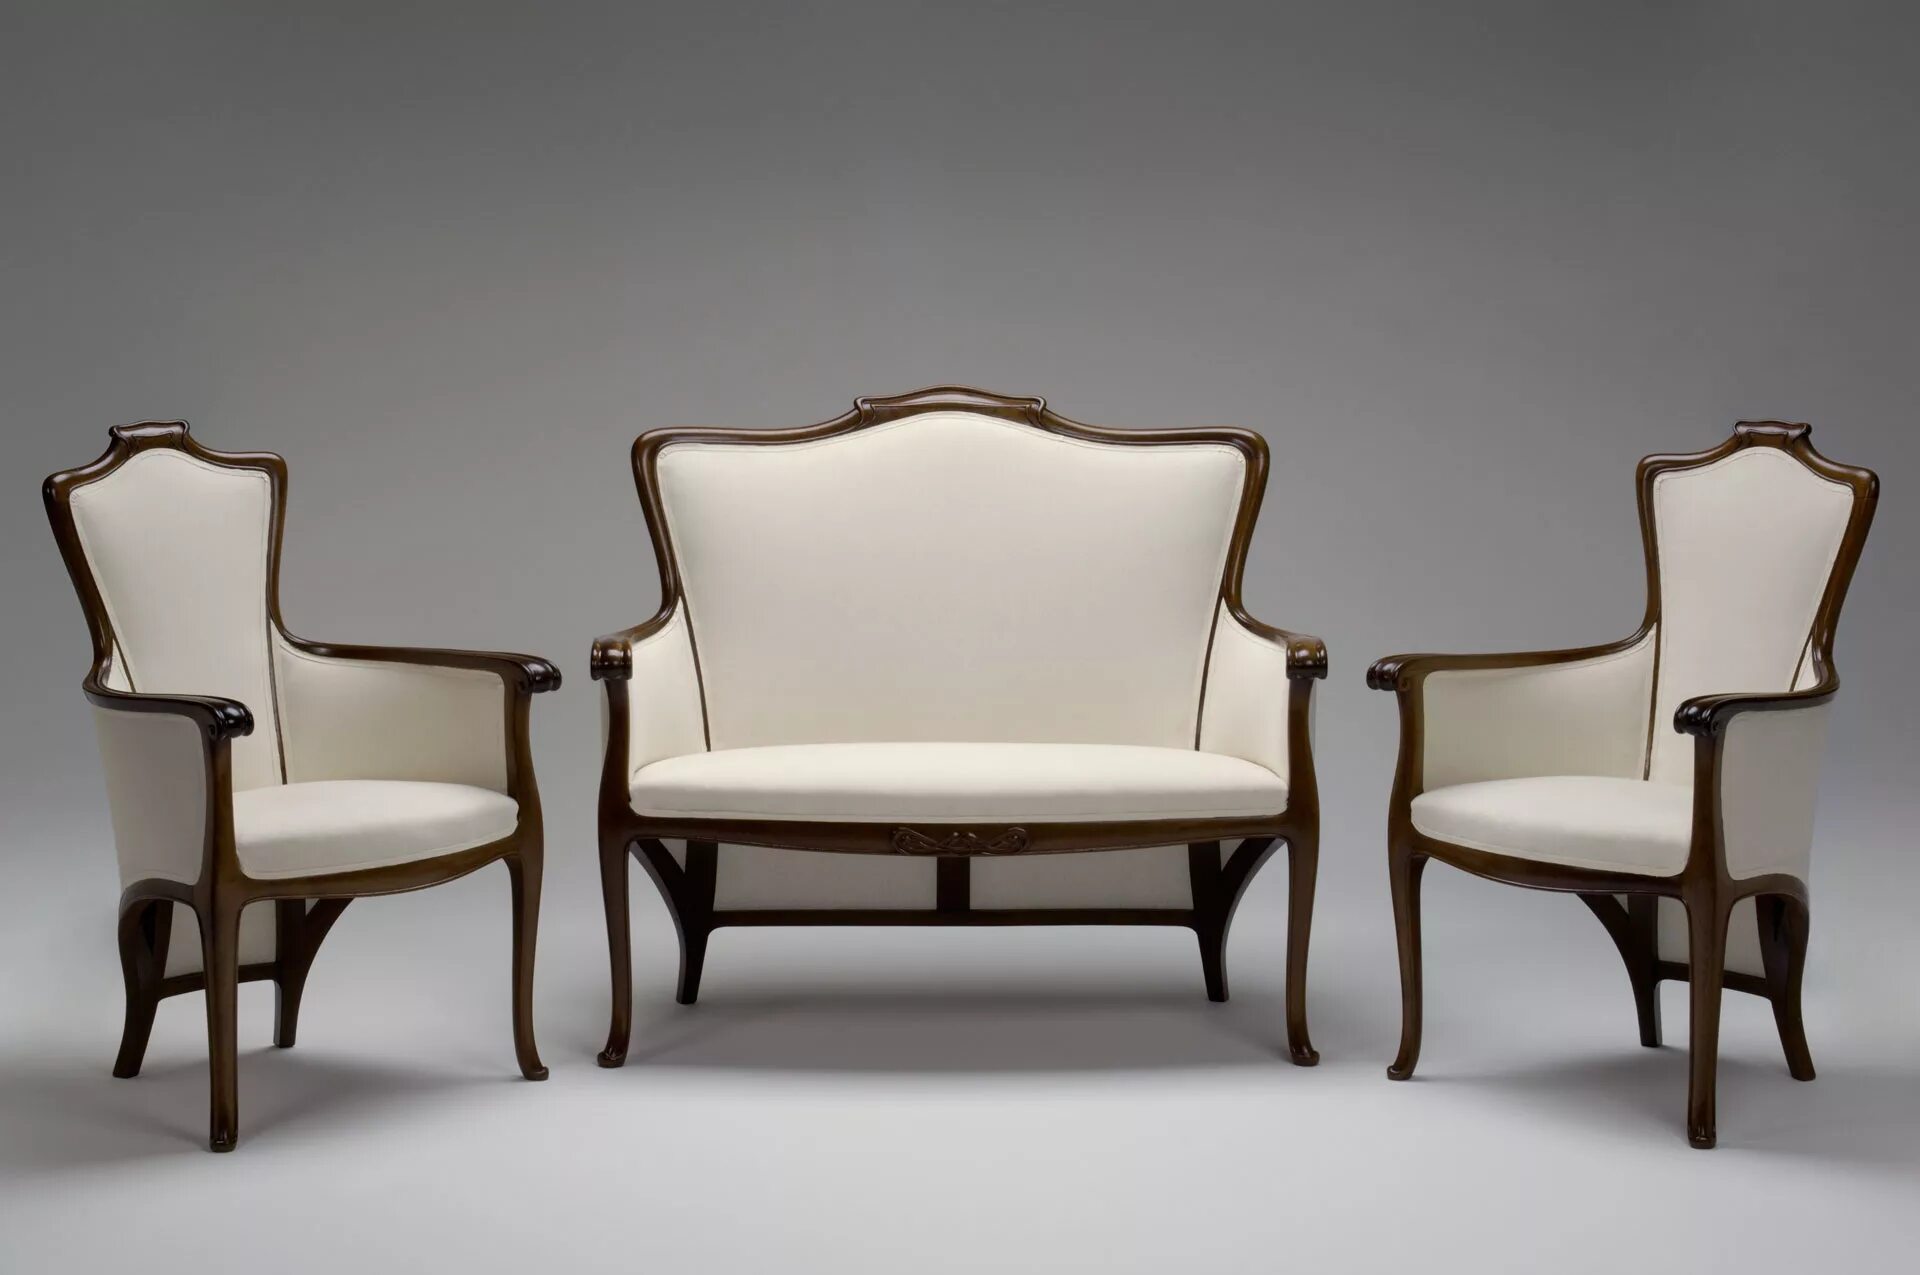 Two armchairs. Кресло в стиле Модерн. Стул в стиле Модерн. Кресло в стиле арт деко. Кресла и стулья стиля Модерн.